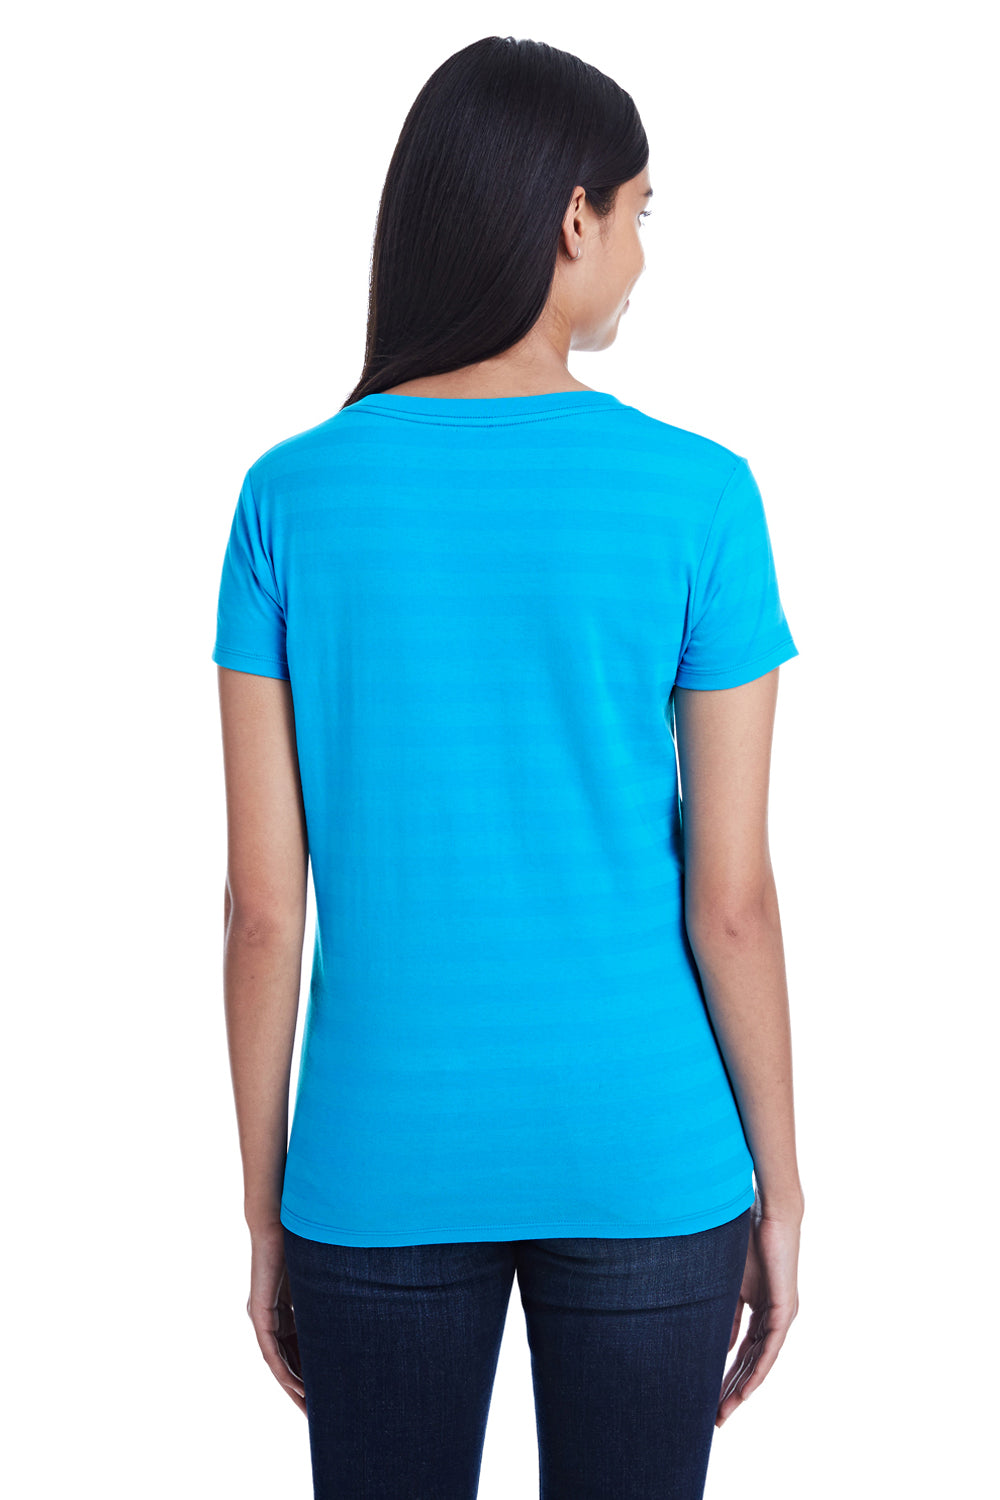 Threadfast Apparel 252RV Womens Short Sleeve V-Neck T-Shirt Turquoise Blue Back